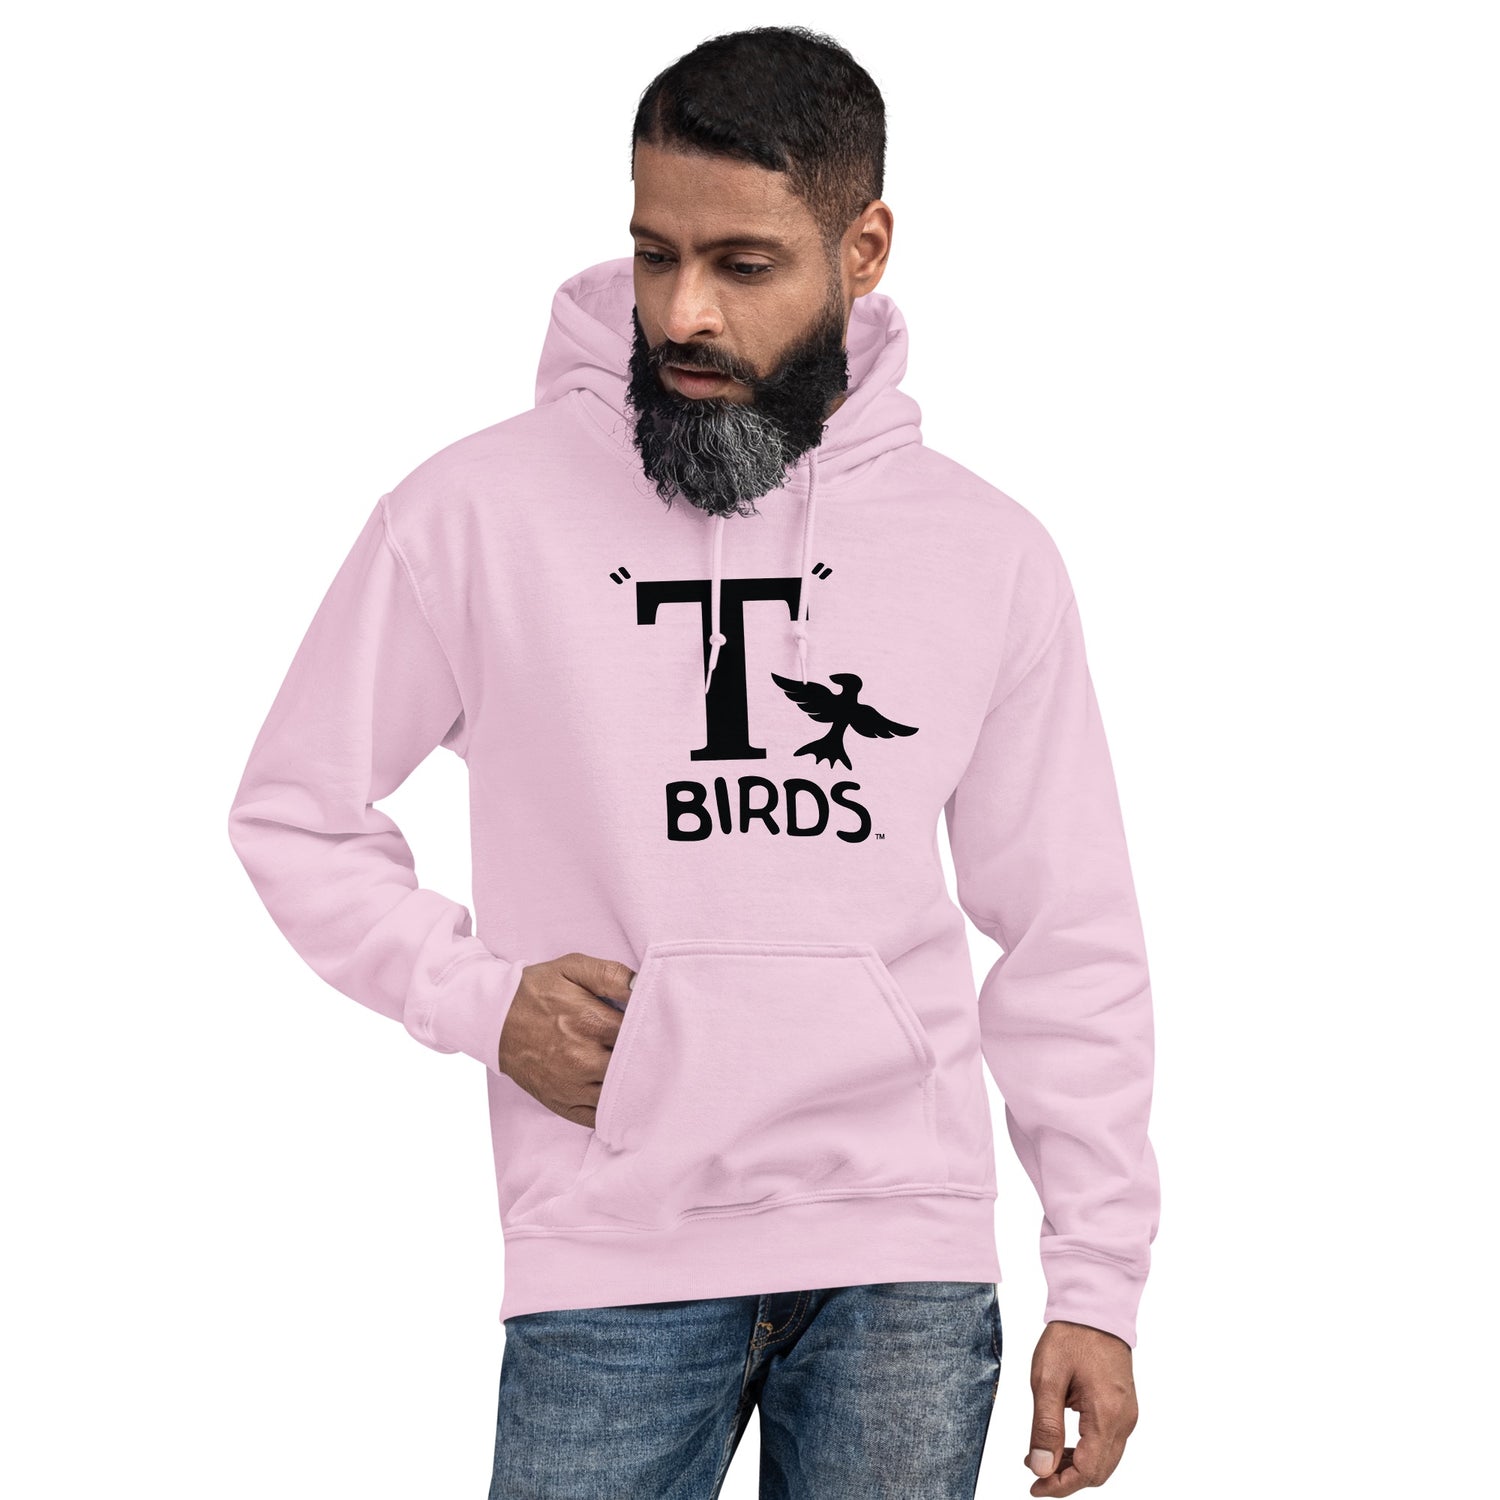 Grease T-Birds Hooded Sweatshirt